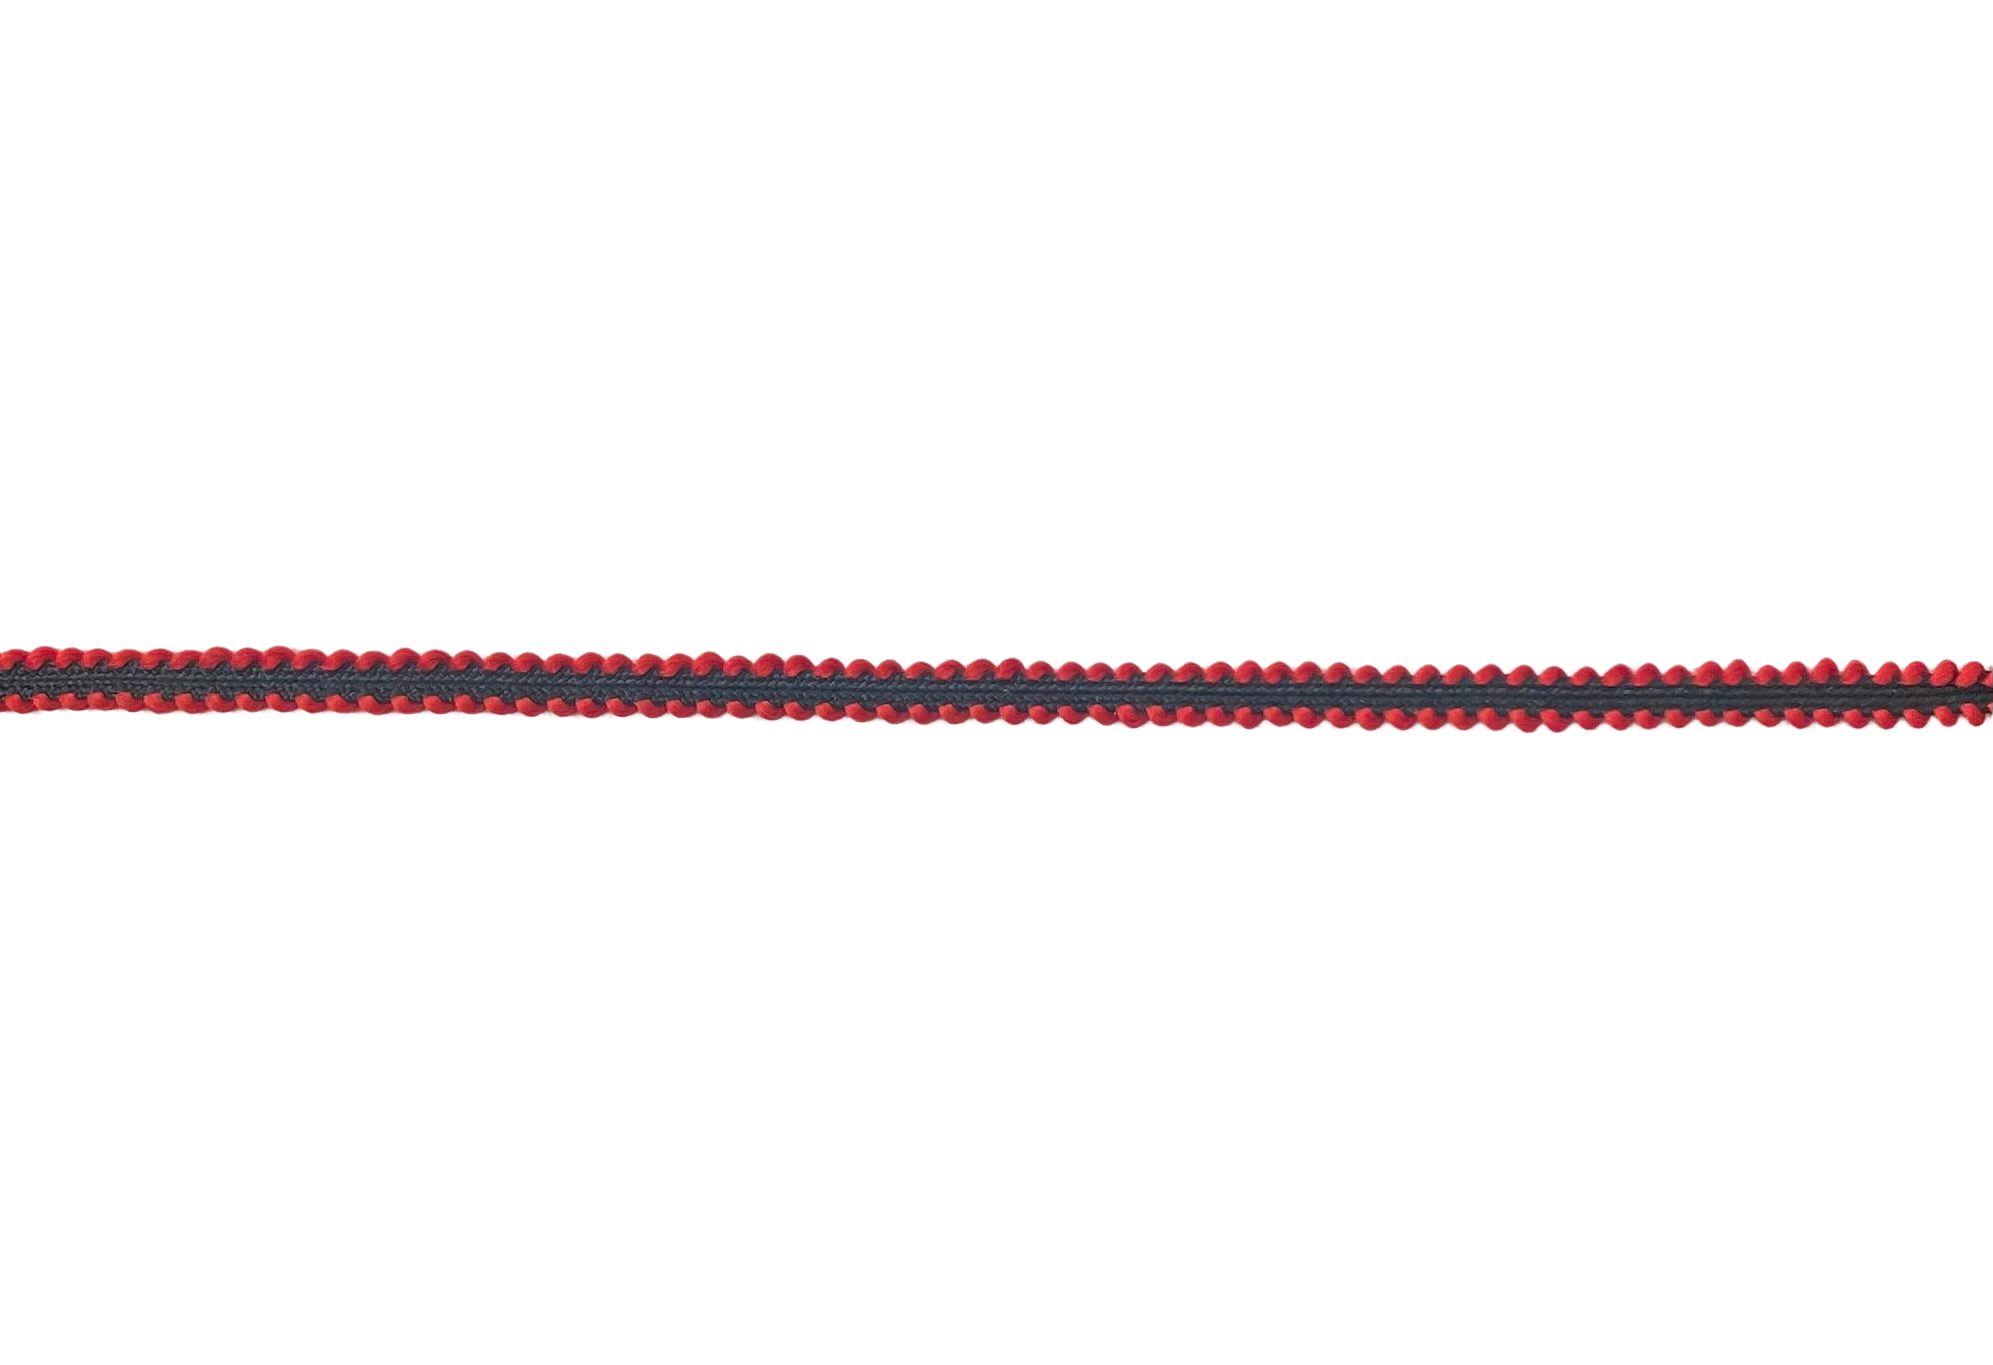 TRIM.LACE:16MTR (5812) - BLACK/RED